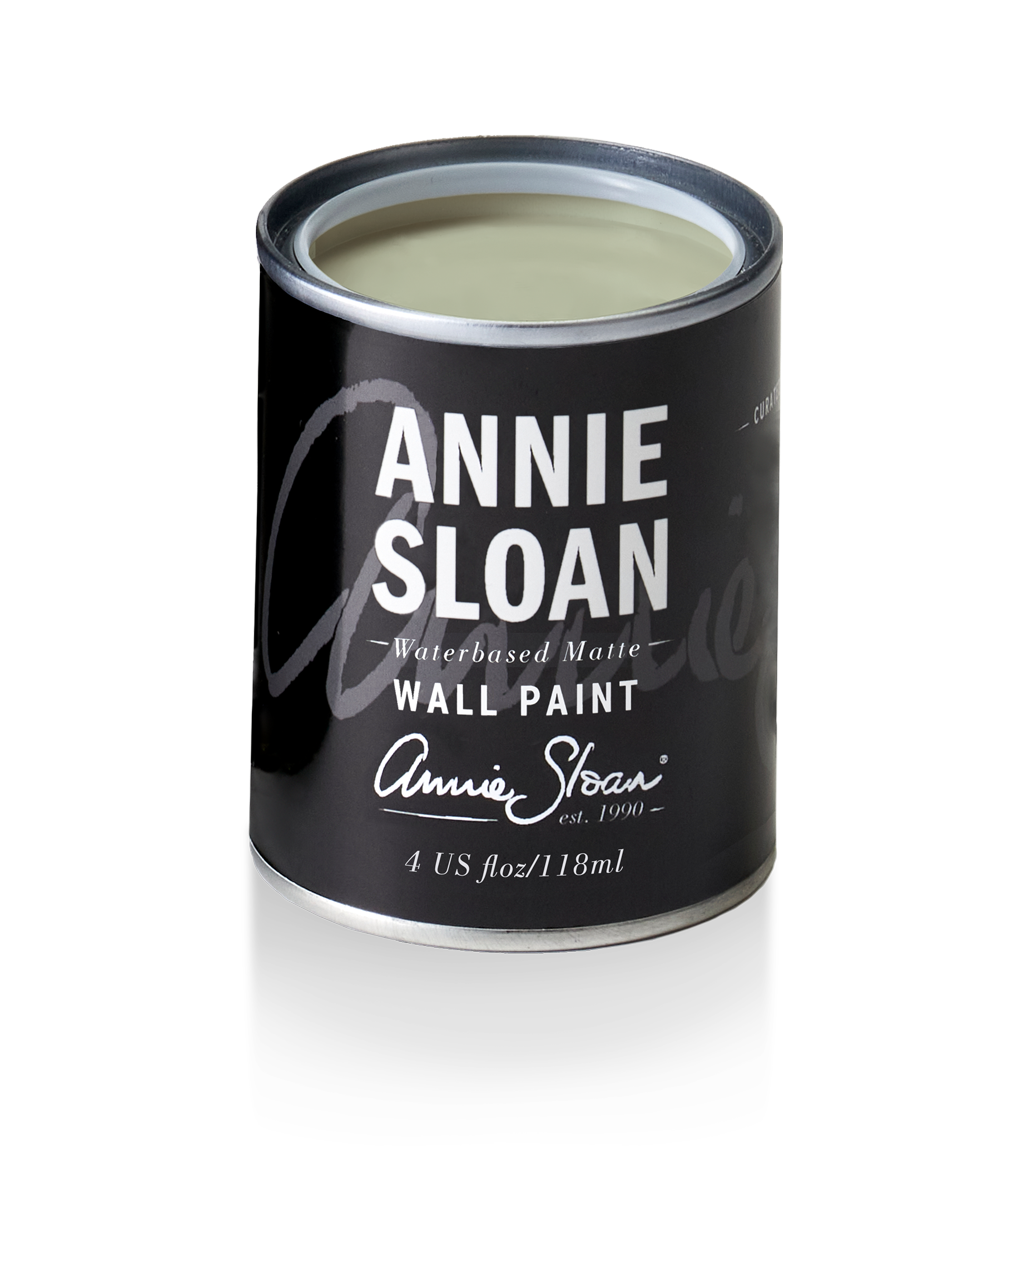 Annie Sloan Wall Paint - Terre Verte